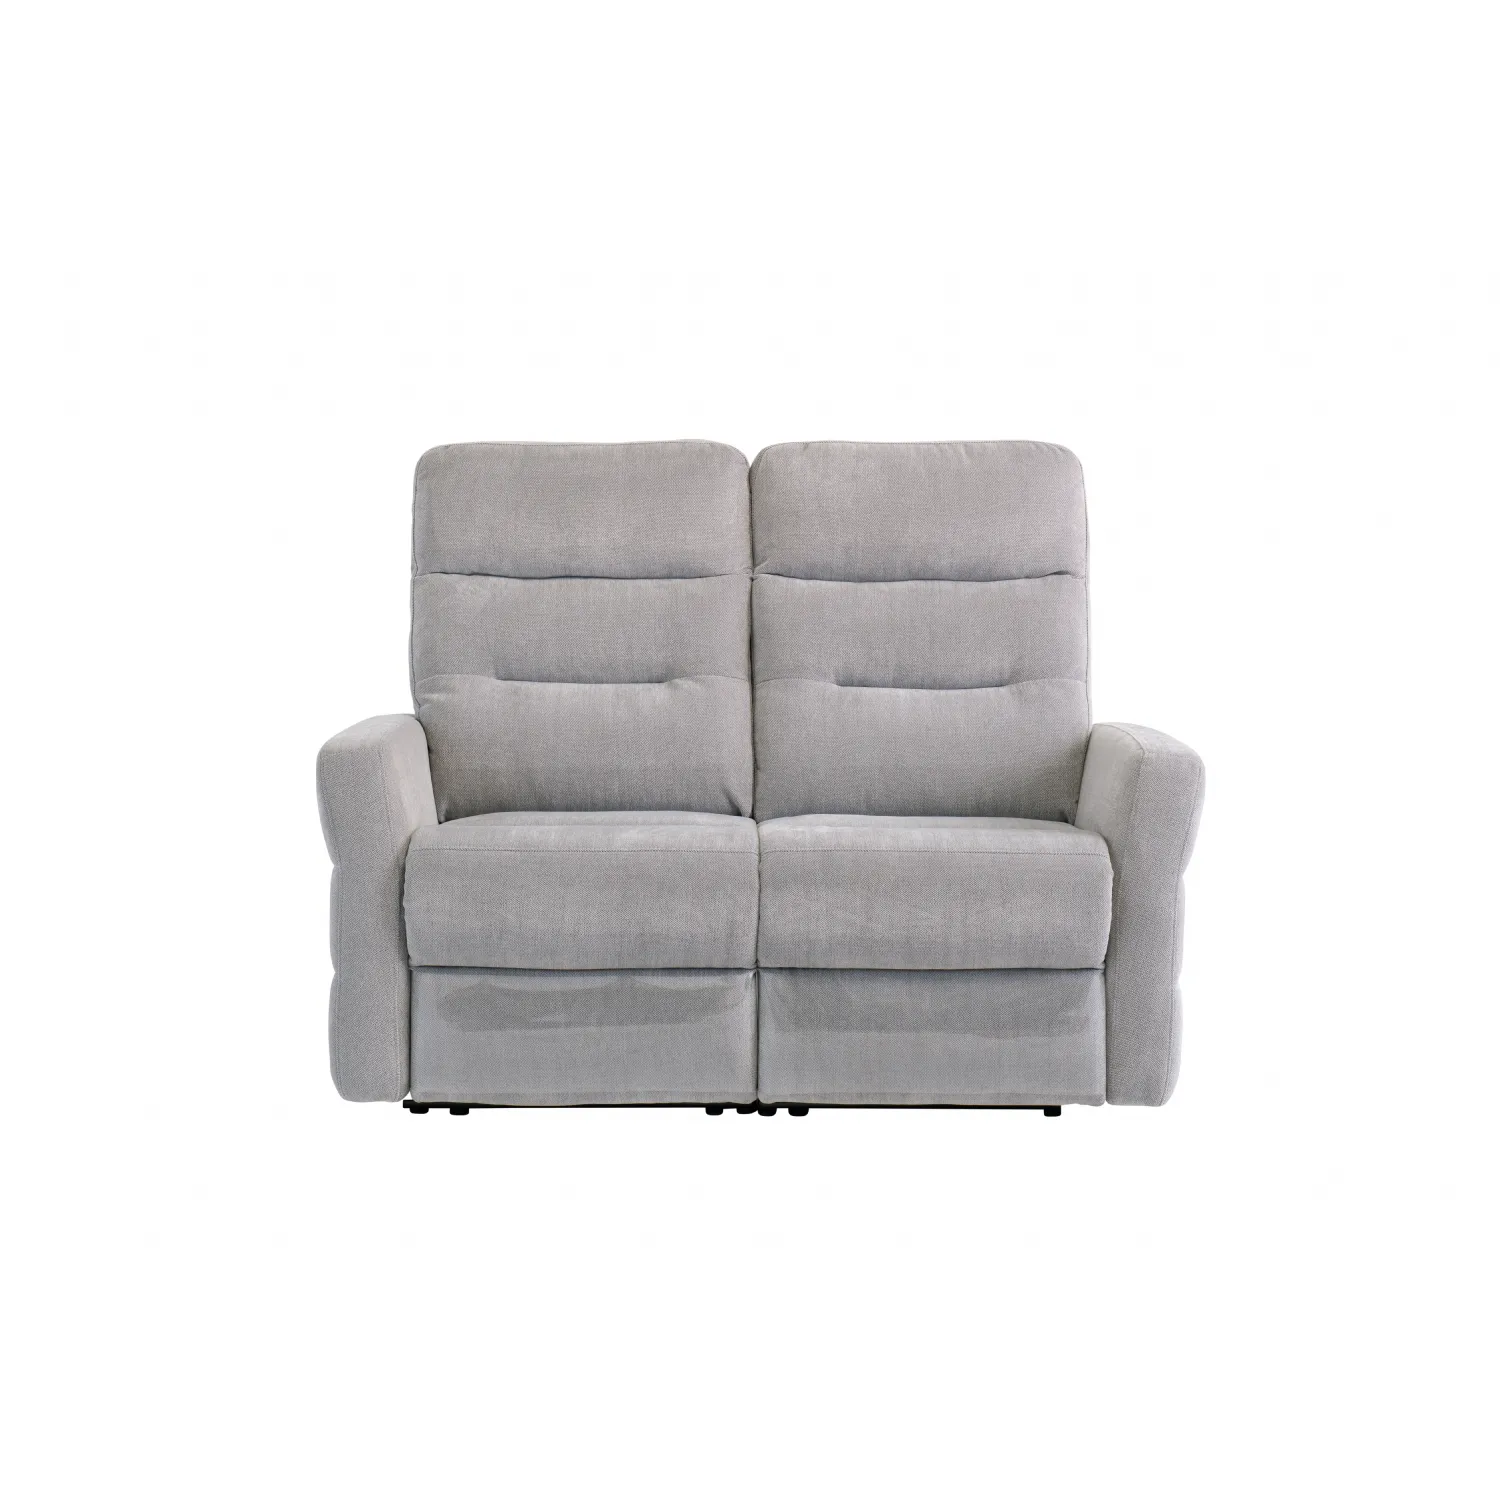 Silver Grey Herringbone Fabric Electric Recliner 2 Seat Sofa